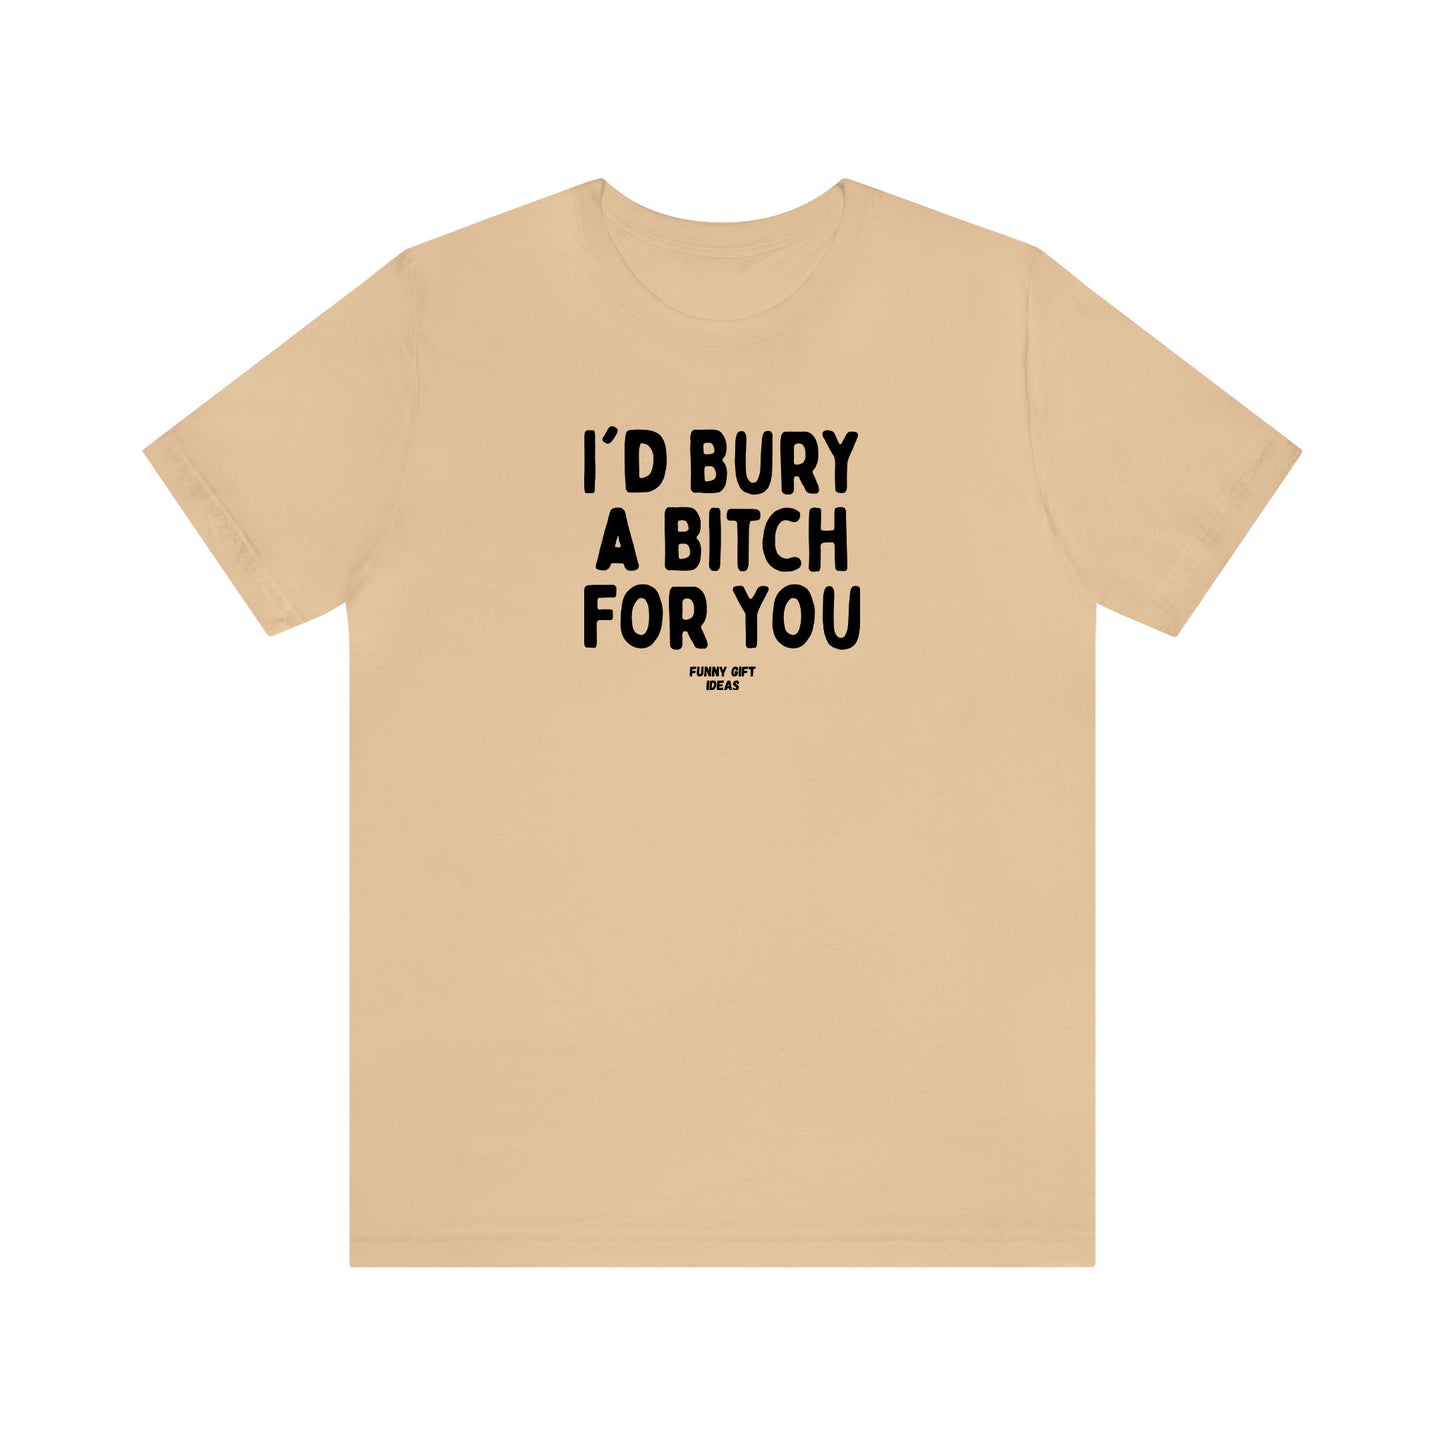 Funny Shirts for Women - I'd Bury a Bitch for You - Women's T Shirts